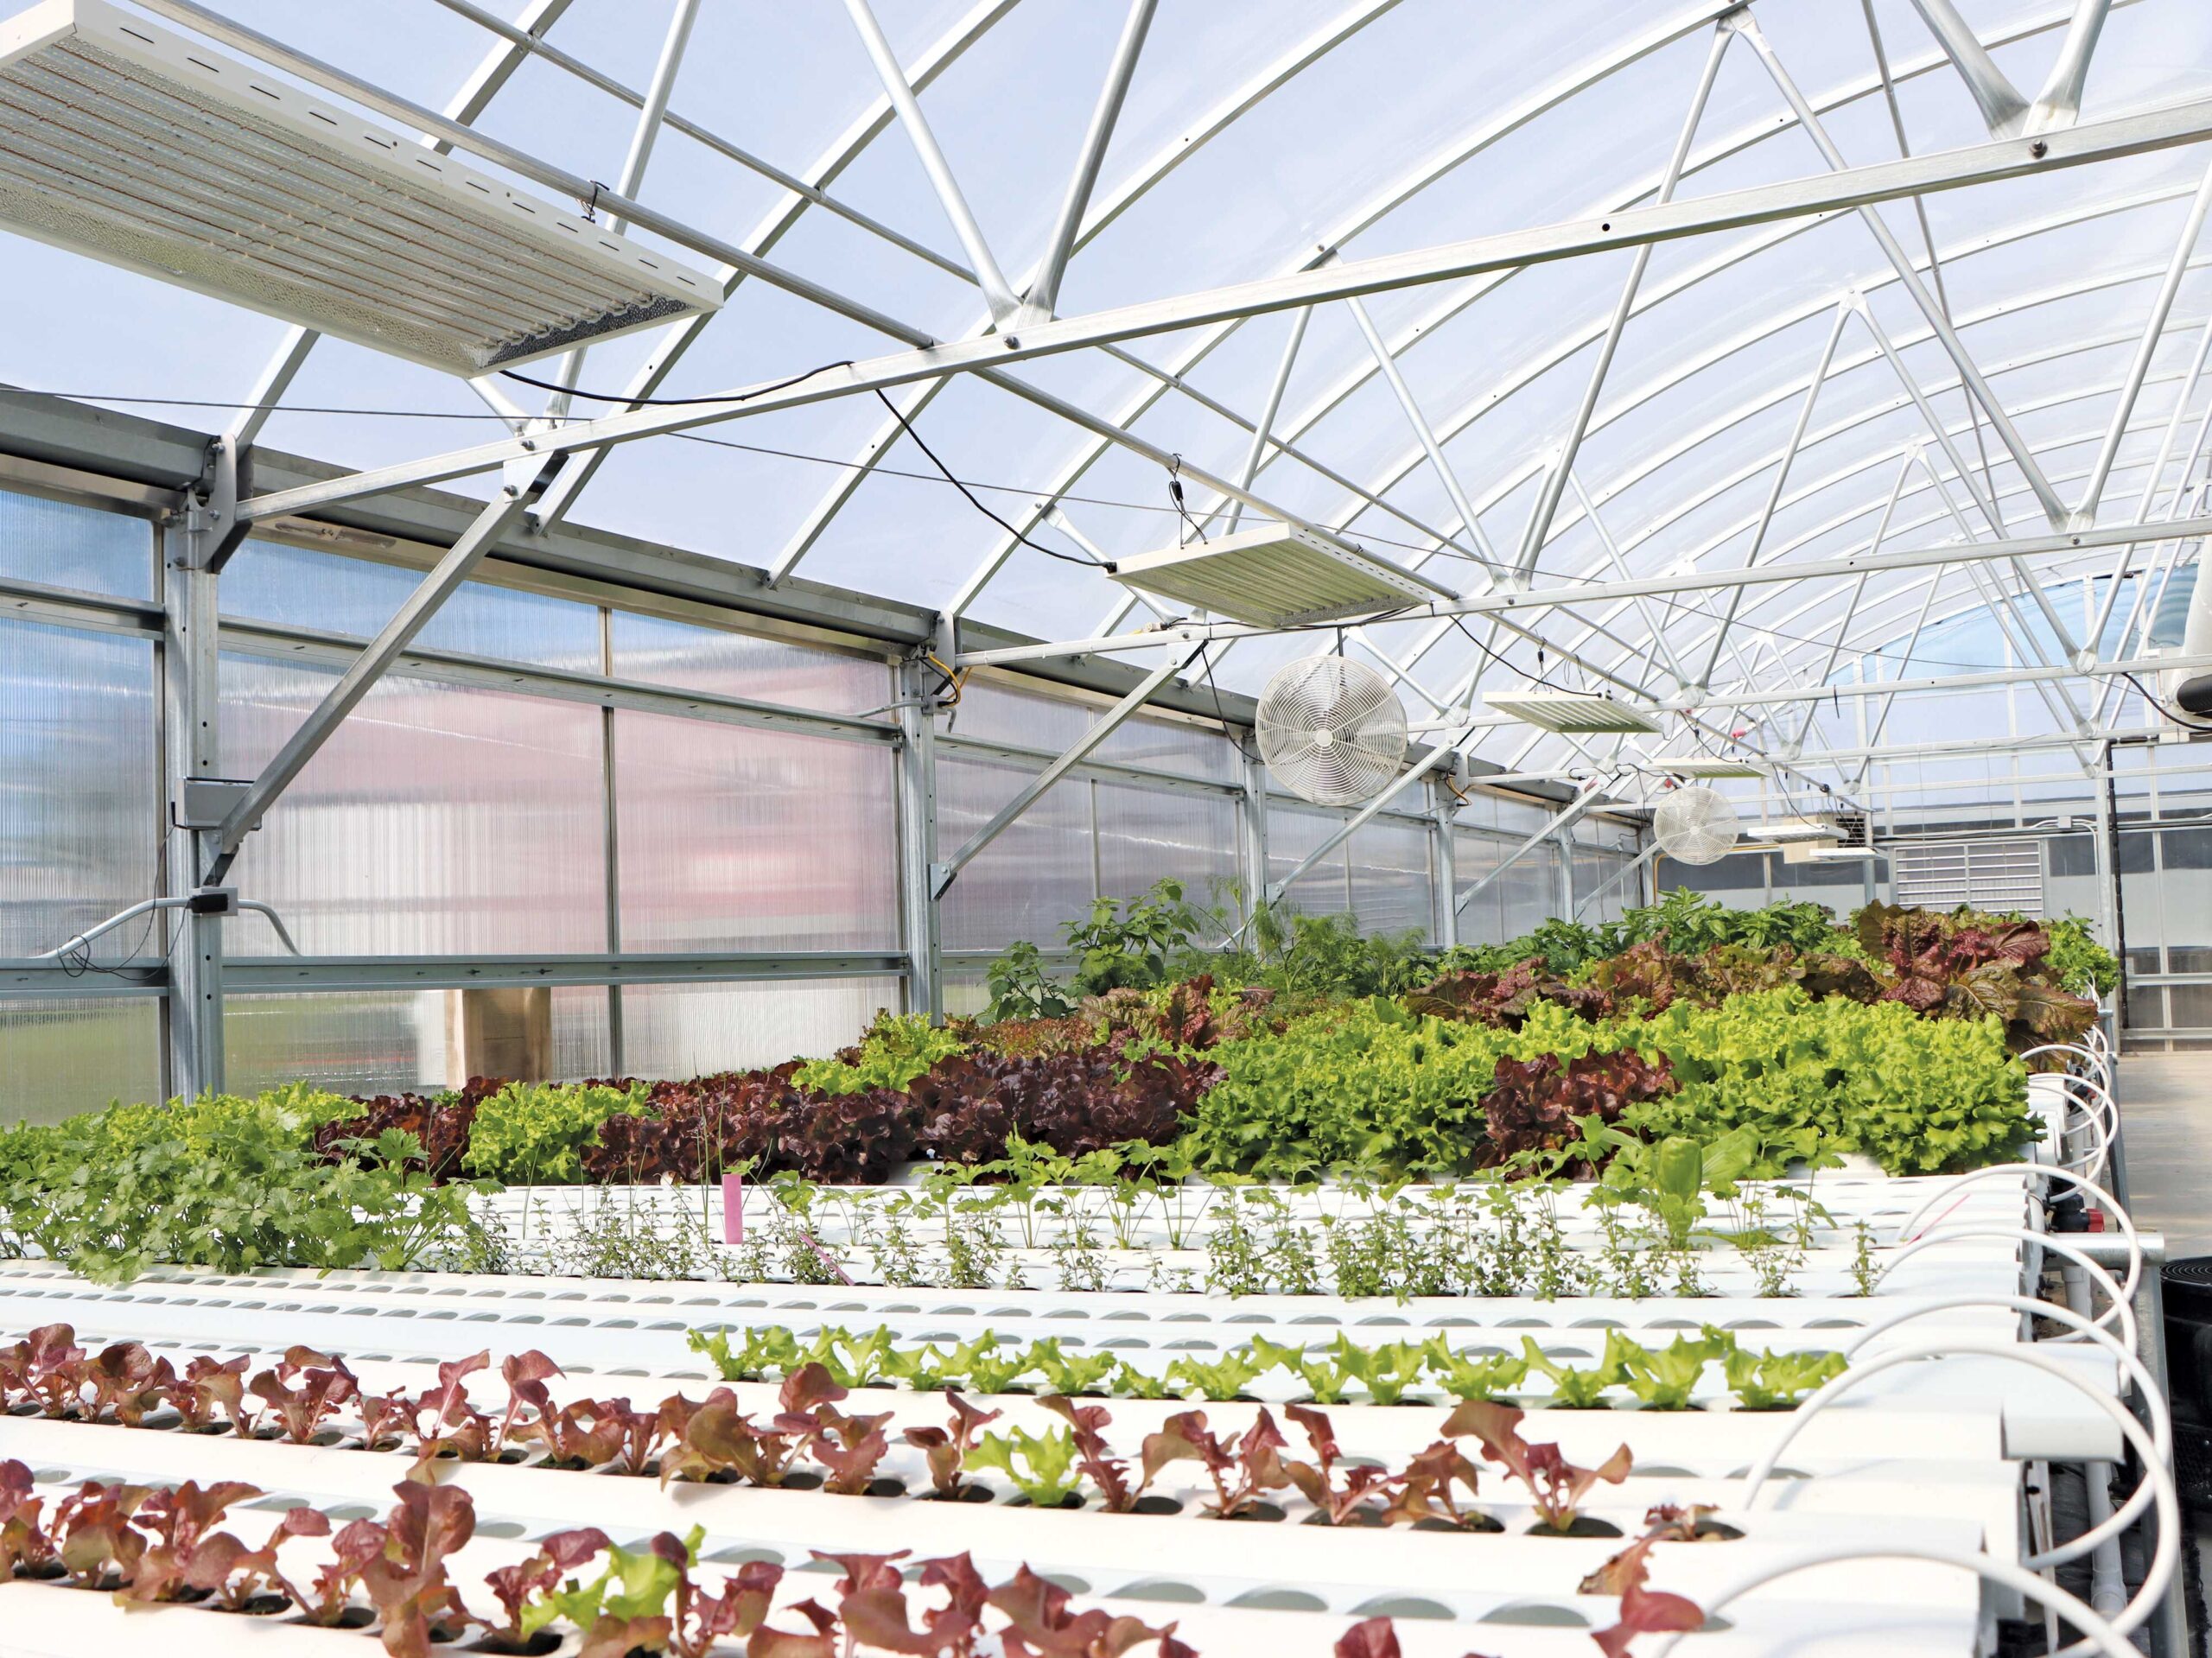 hydroponic plants inside a greenhouse